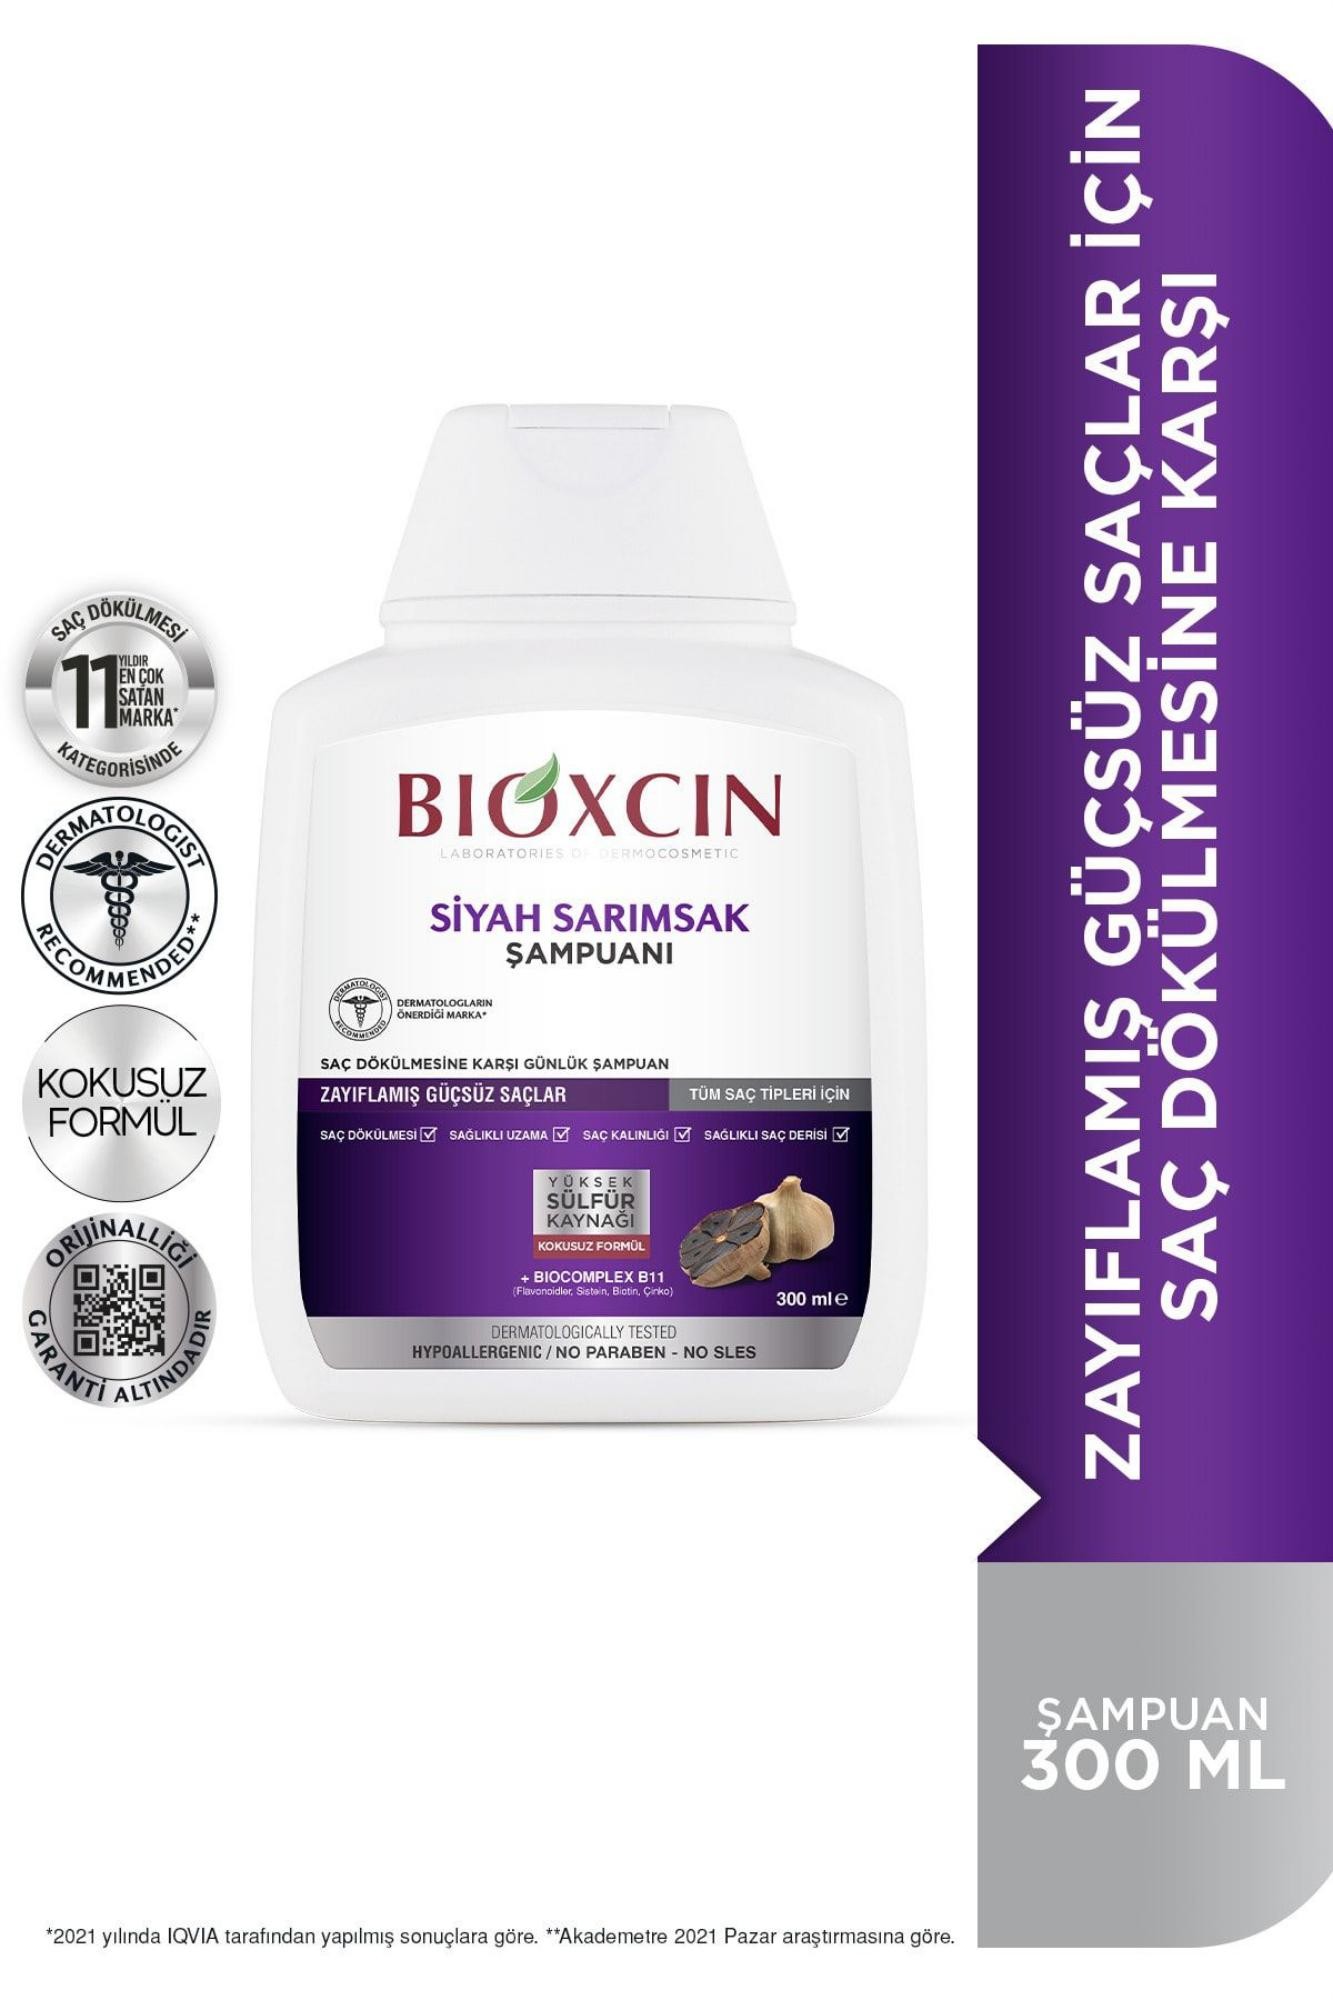 Bioxcin Black Garlic Shampoo 300 Ml - Hair Loss Garlic Shampoo